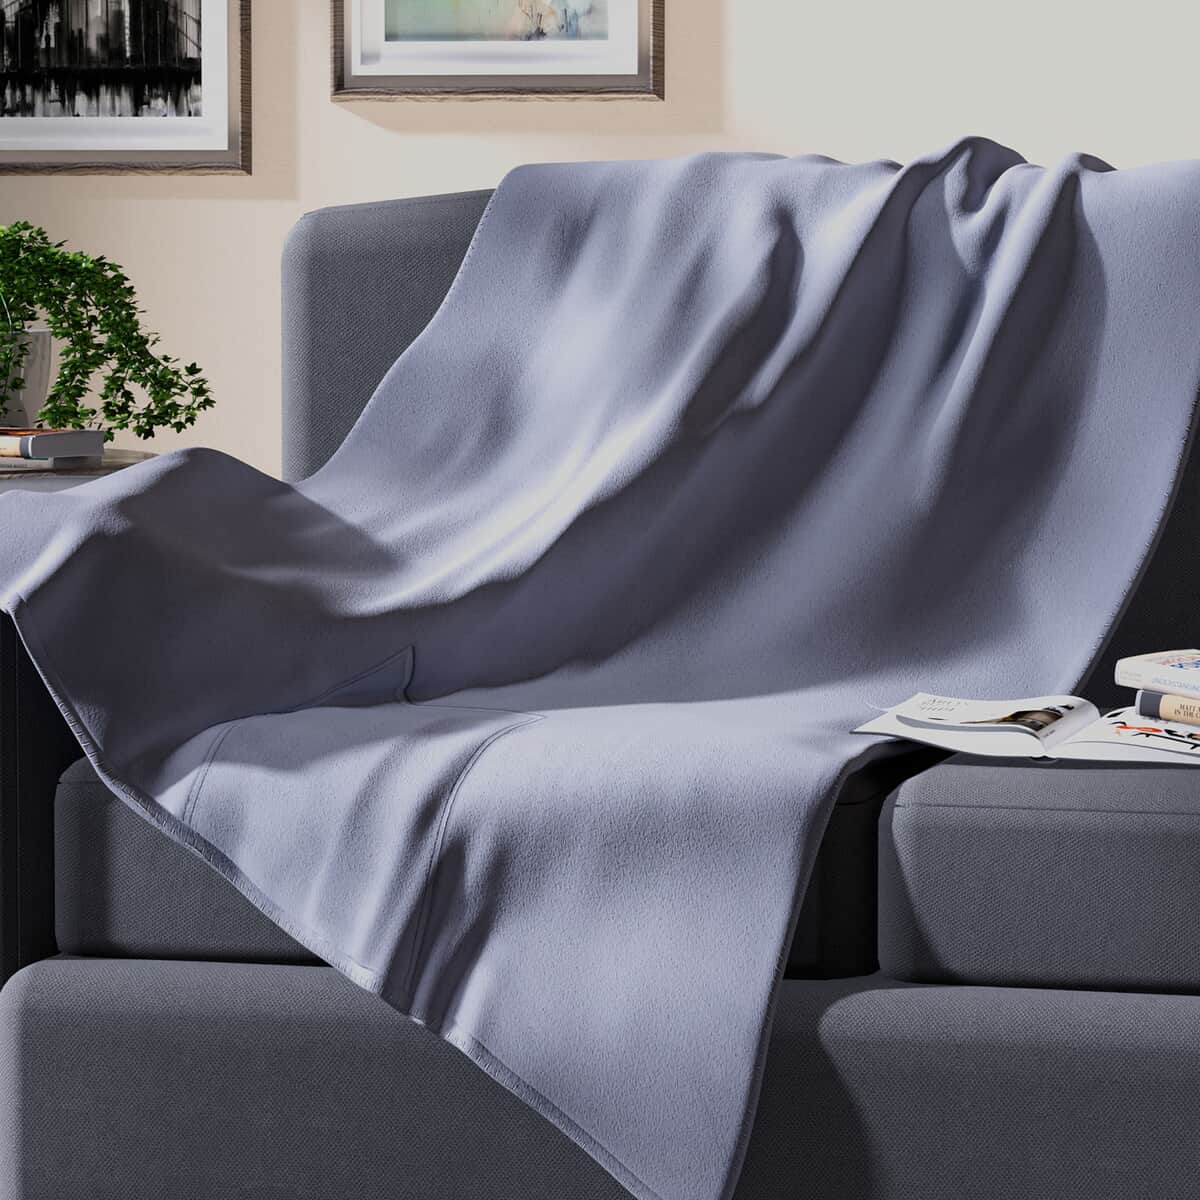 Homesmart 2 in 1 Gray Solid Fleece Travel Blanket with Folded Storage Pocket (Microfiber) image number 0